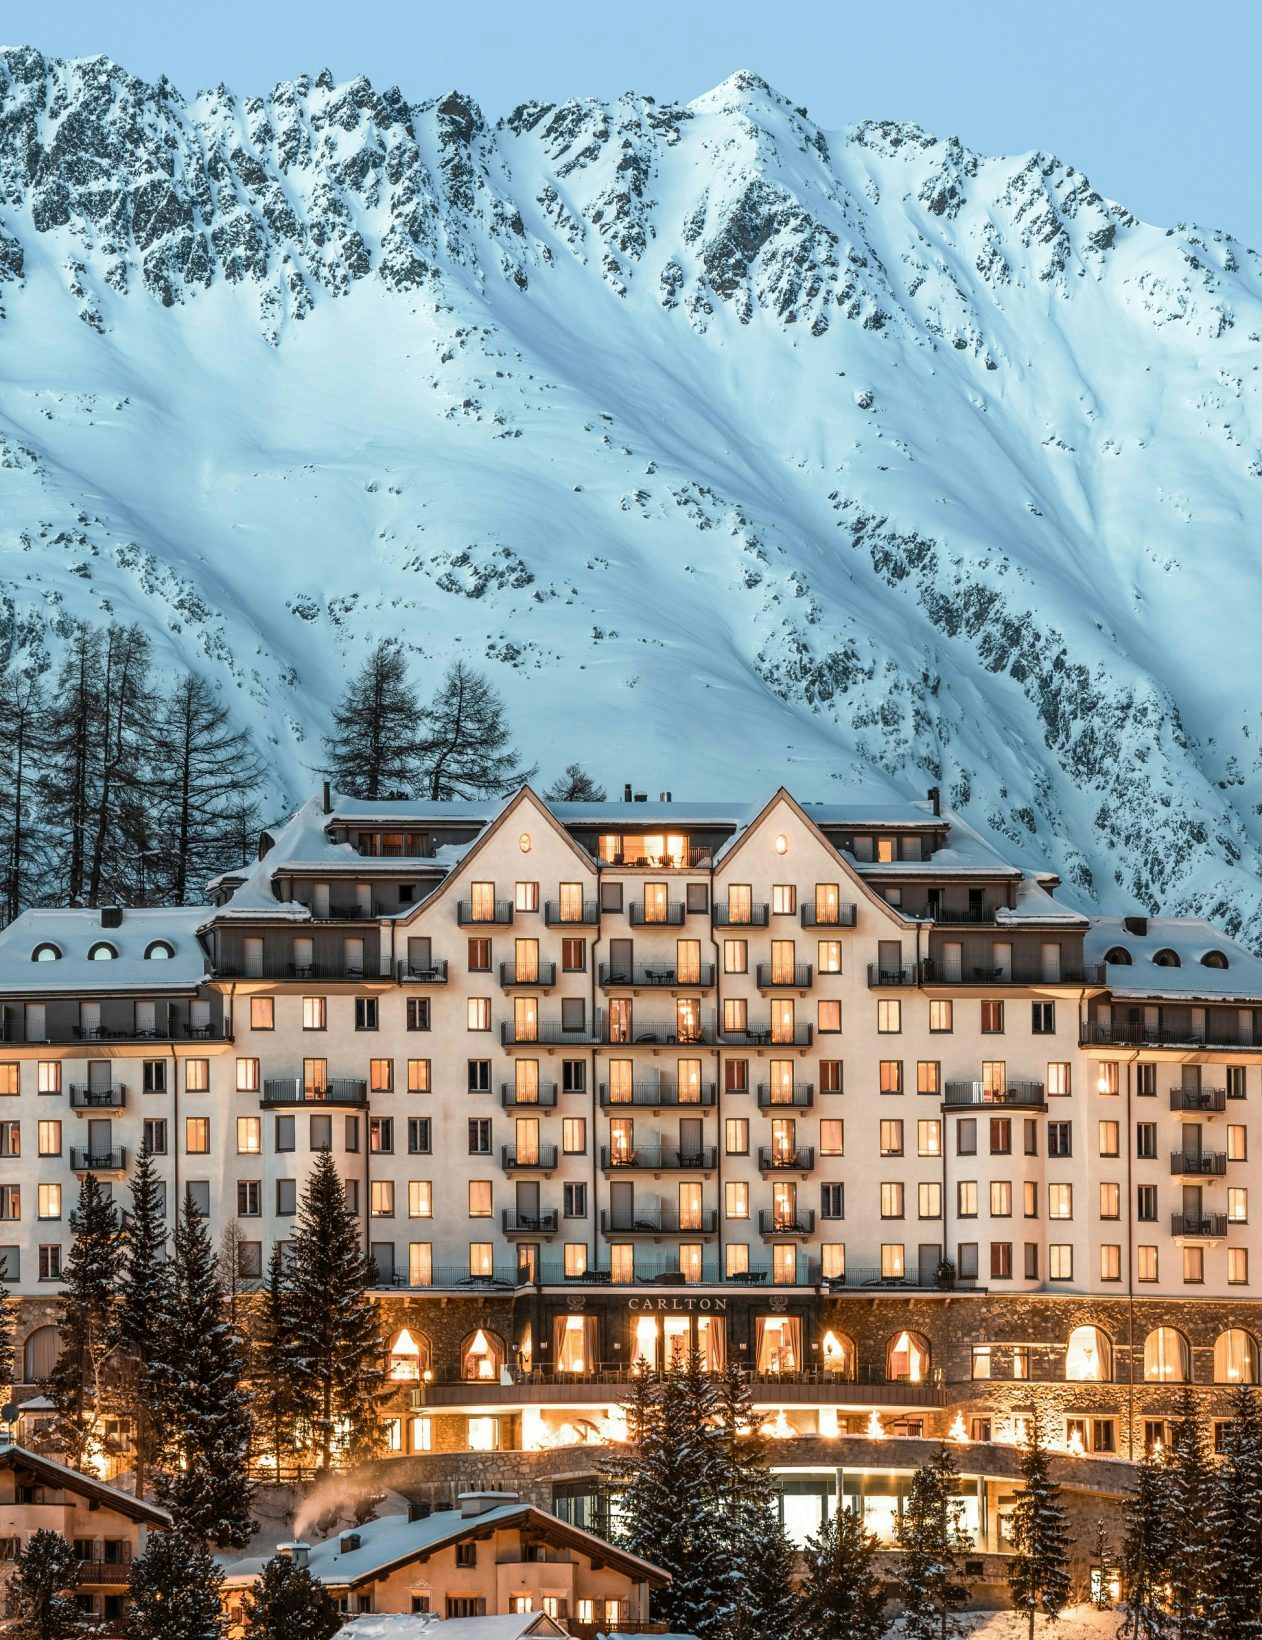 St. Moritz: experience unique winter sports